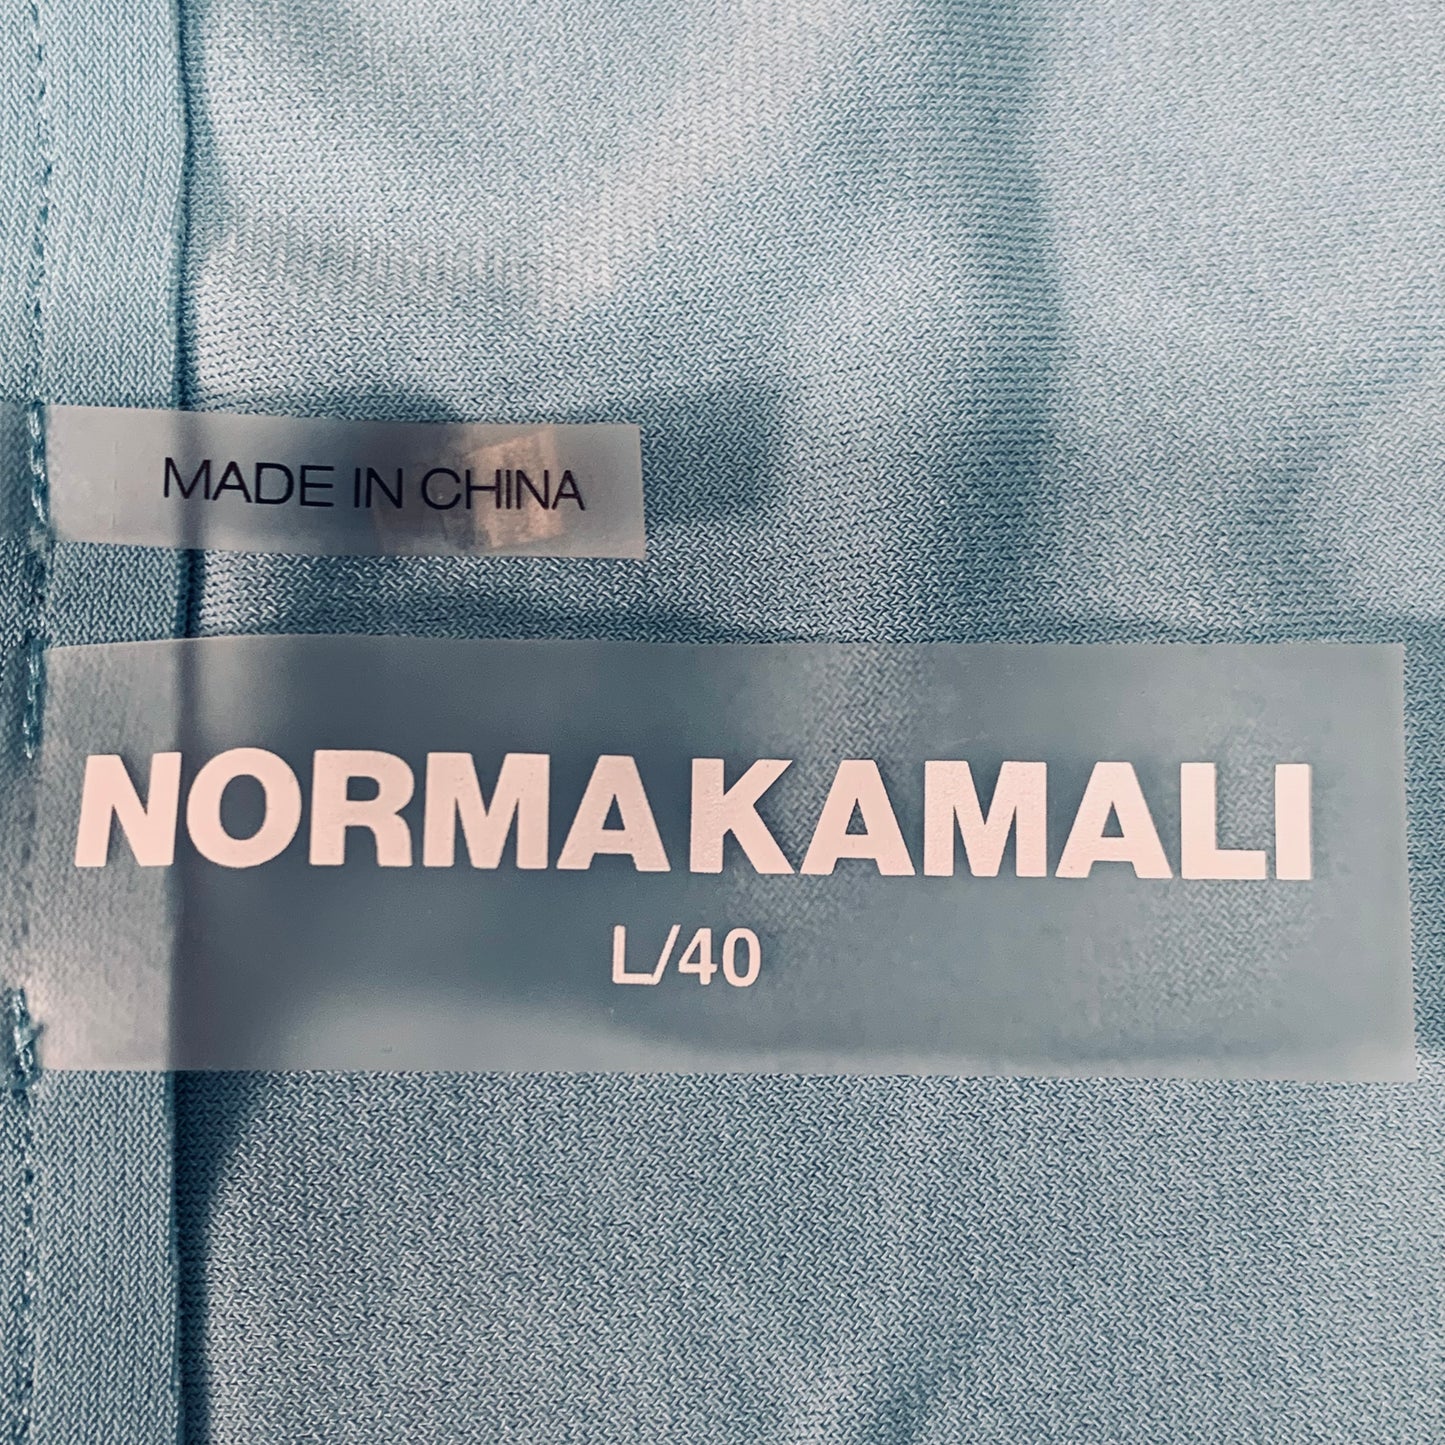 NORMA KAMALI Oversized Boyfriend Nk Shirt W/ Ruffle Bottom SZ L/40 Powder Blue KK5216PL149908 (New)